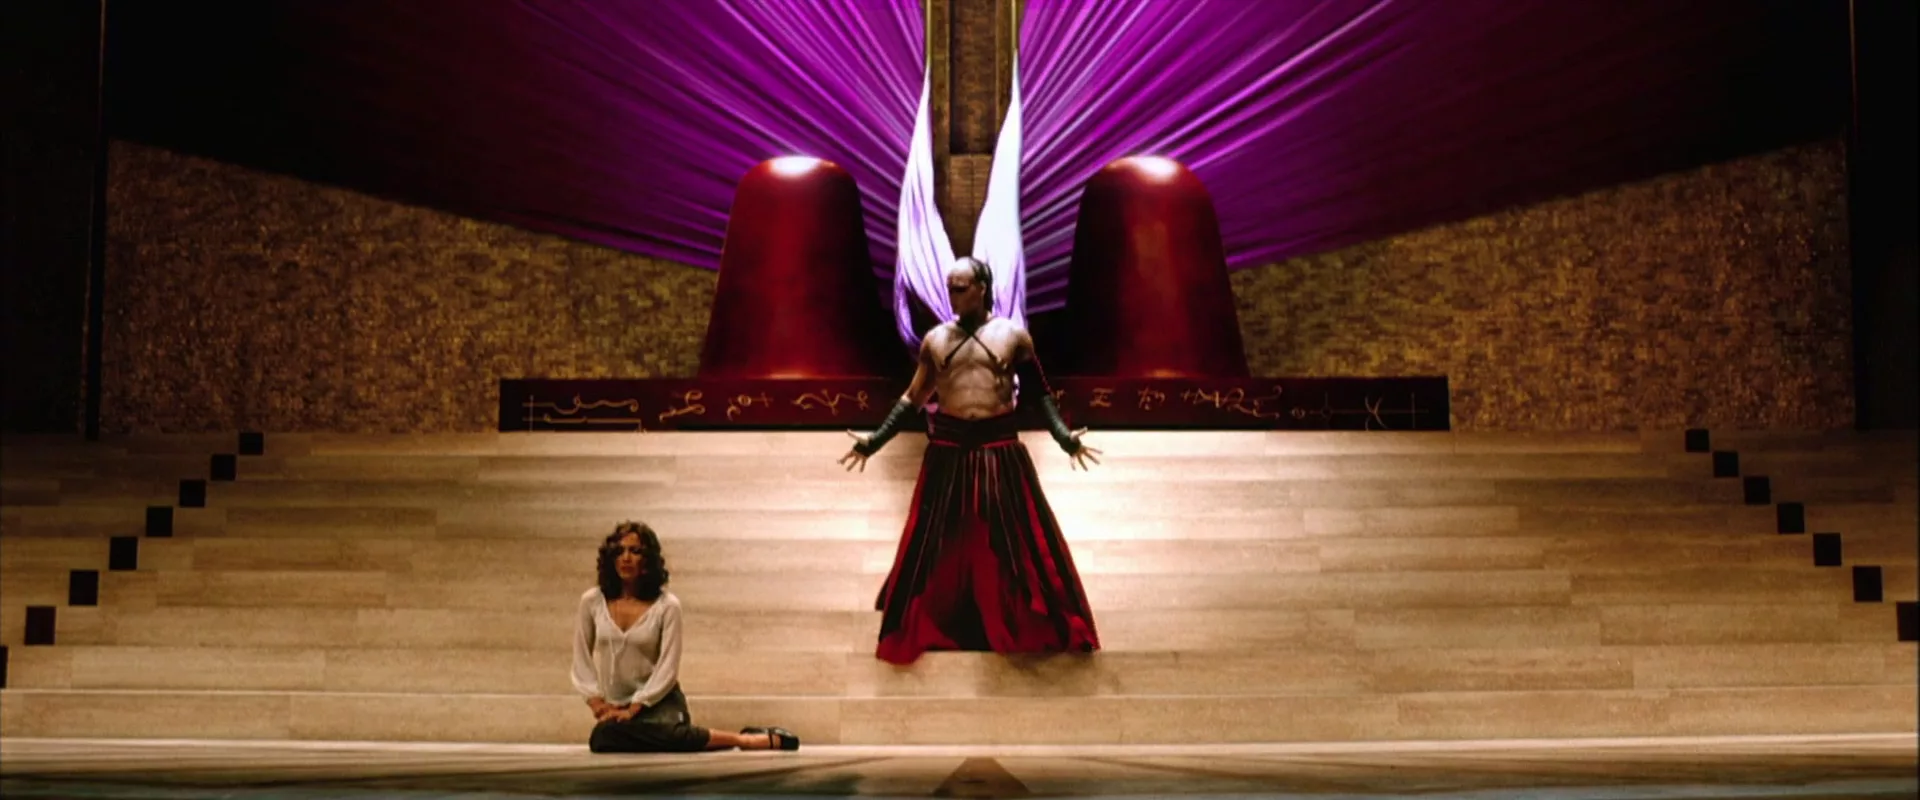 Jennifer Lopez before her transformation into a cyberpunk sphinx